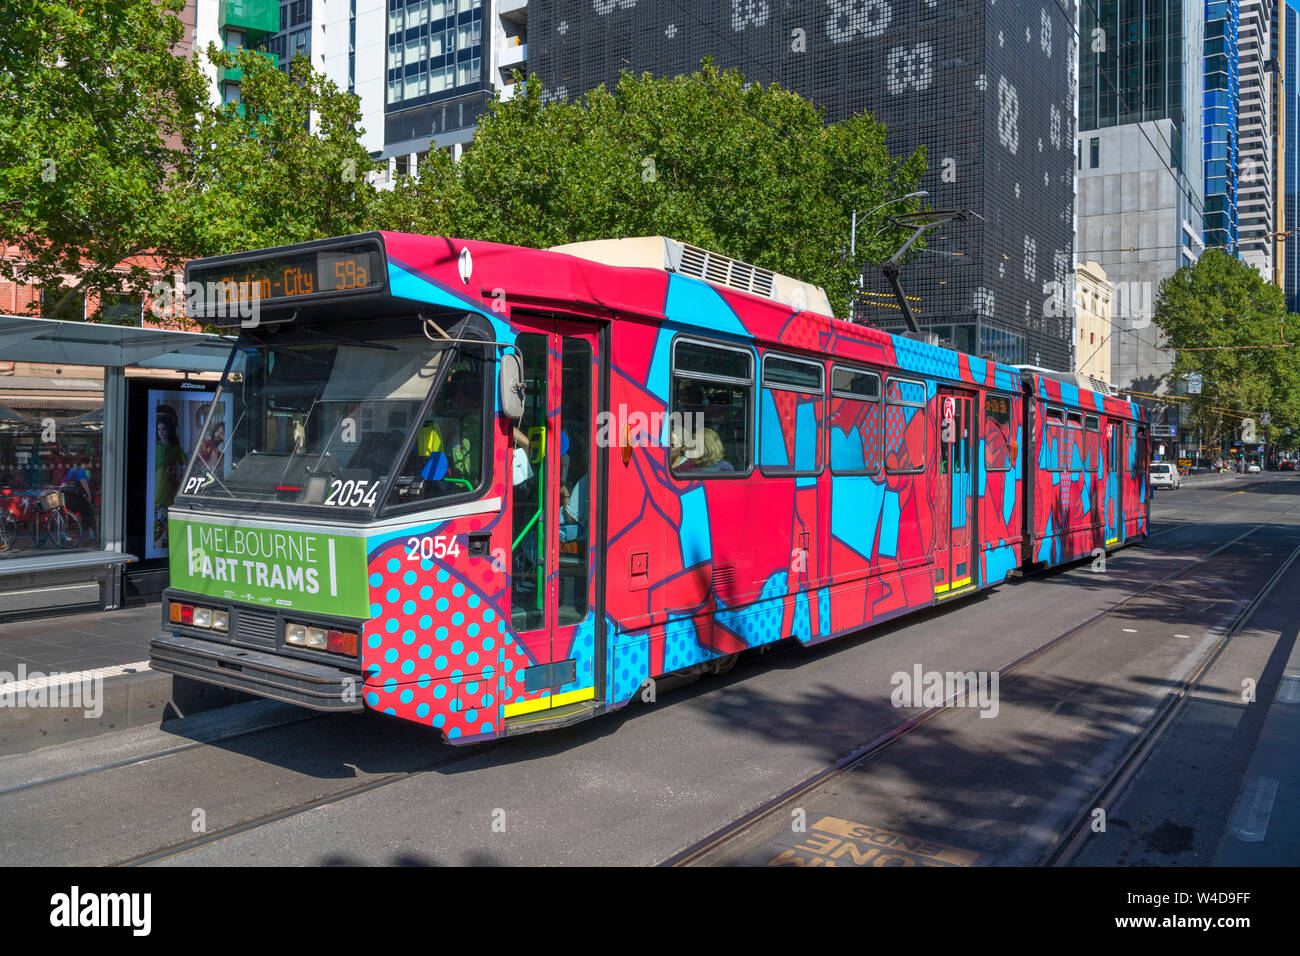 Melbourne Arts Tram no 2054, designed by the artist Stephen Baker, Elizabeth Street, Melbourne, Victoria, Australia Stock Photo